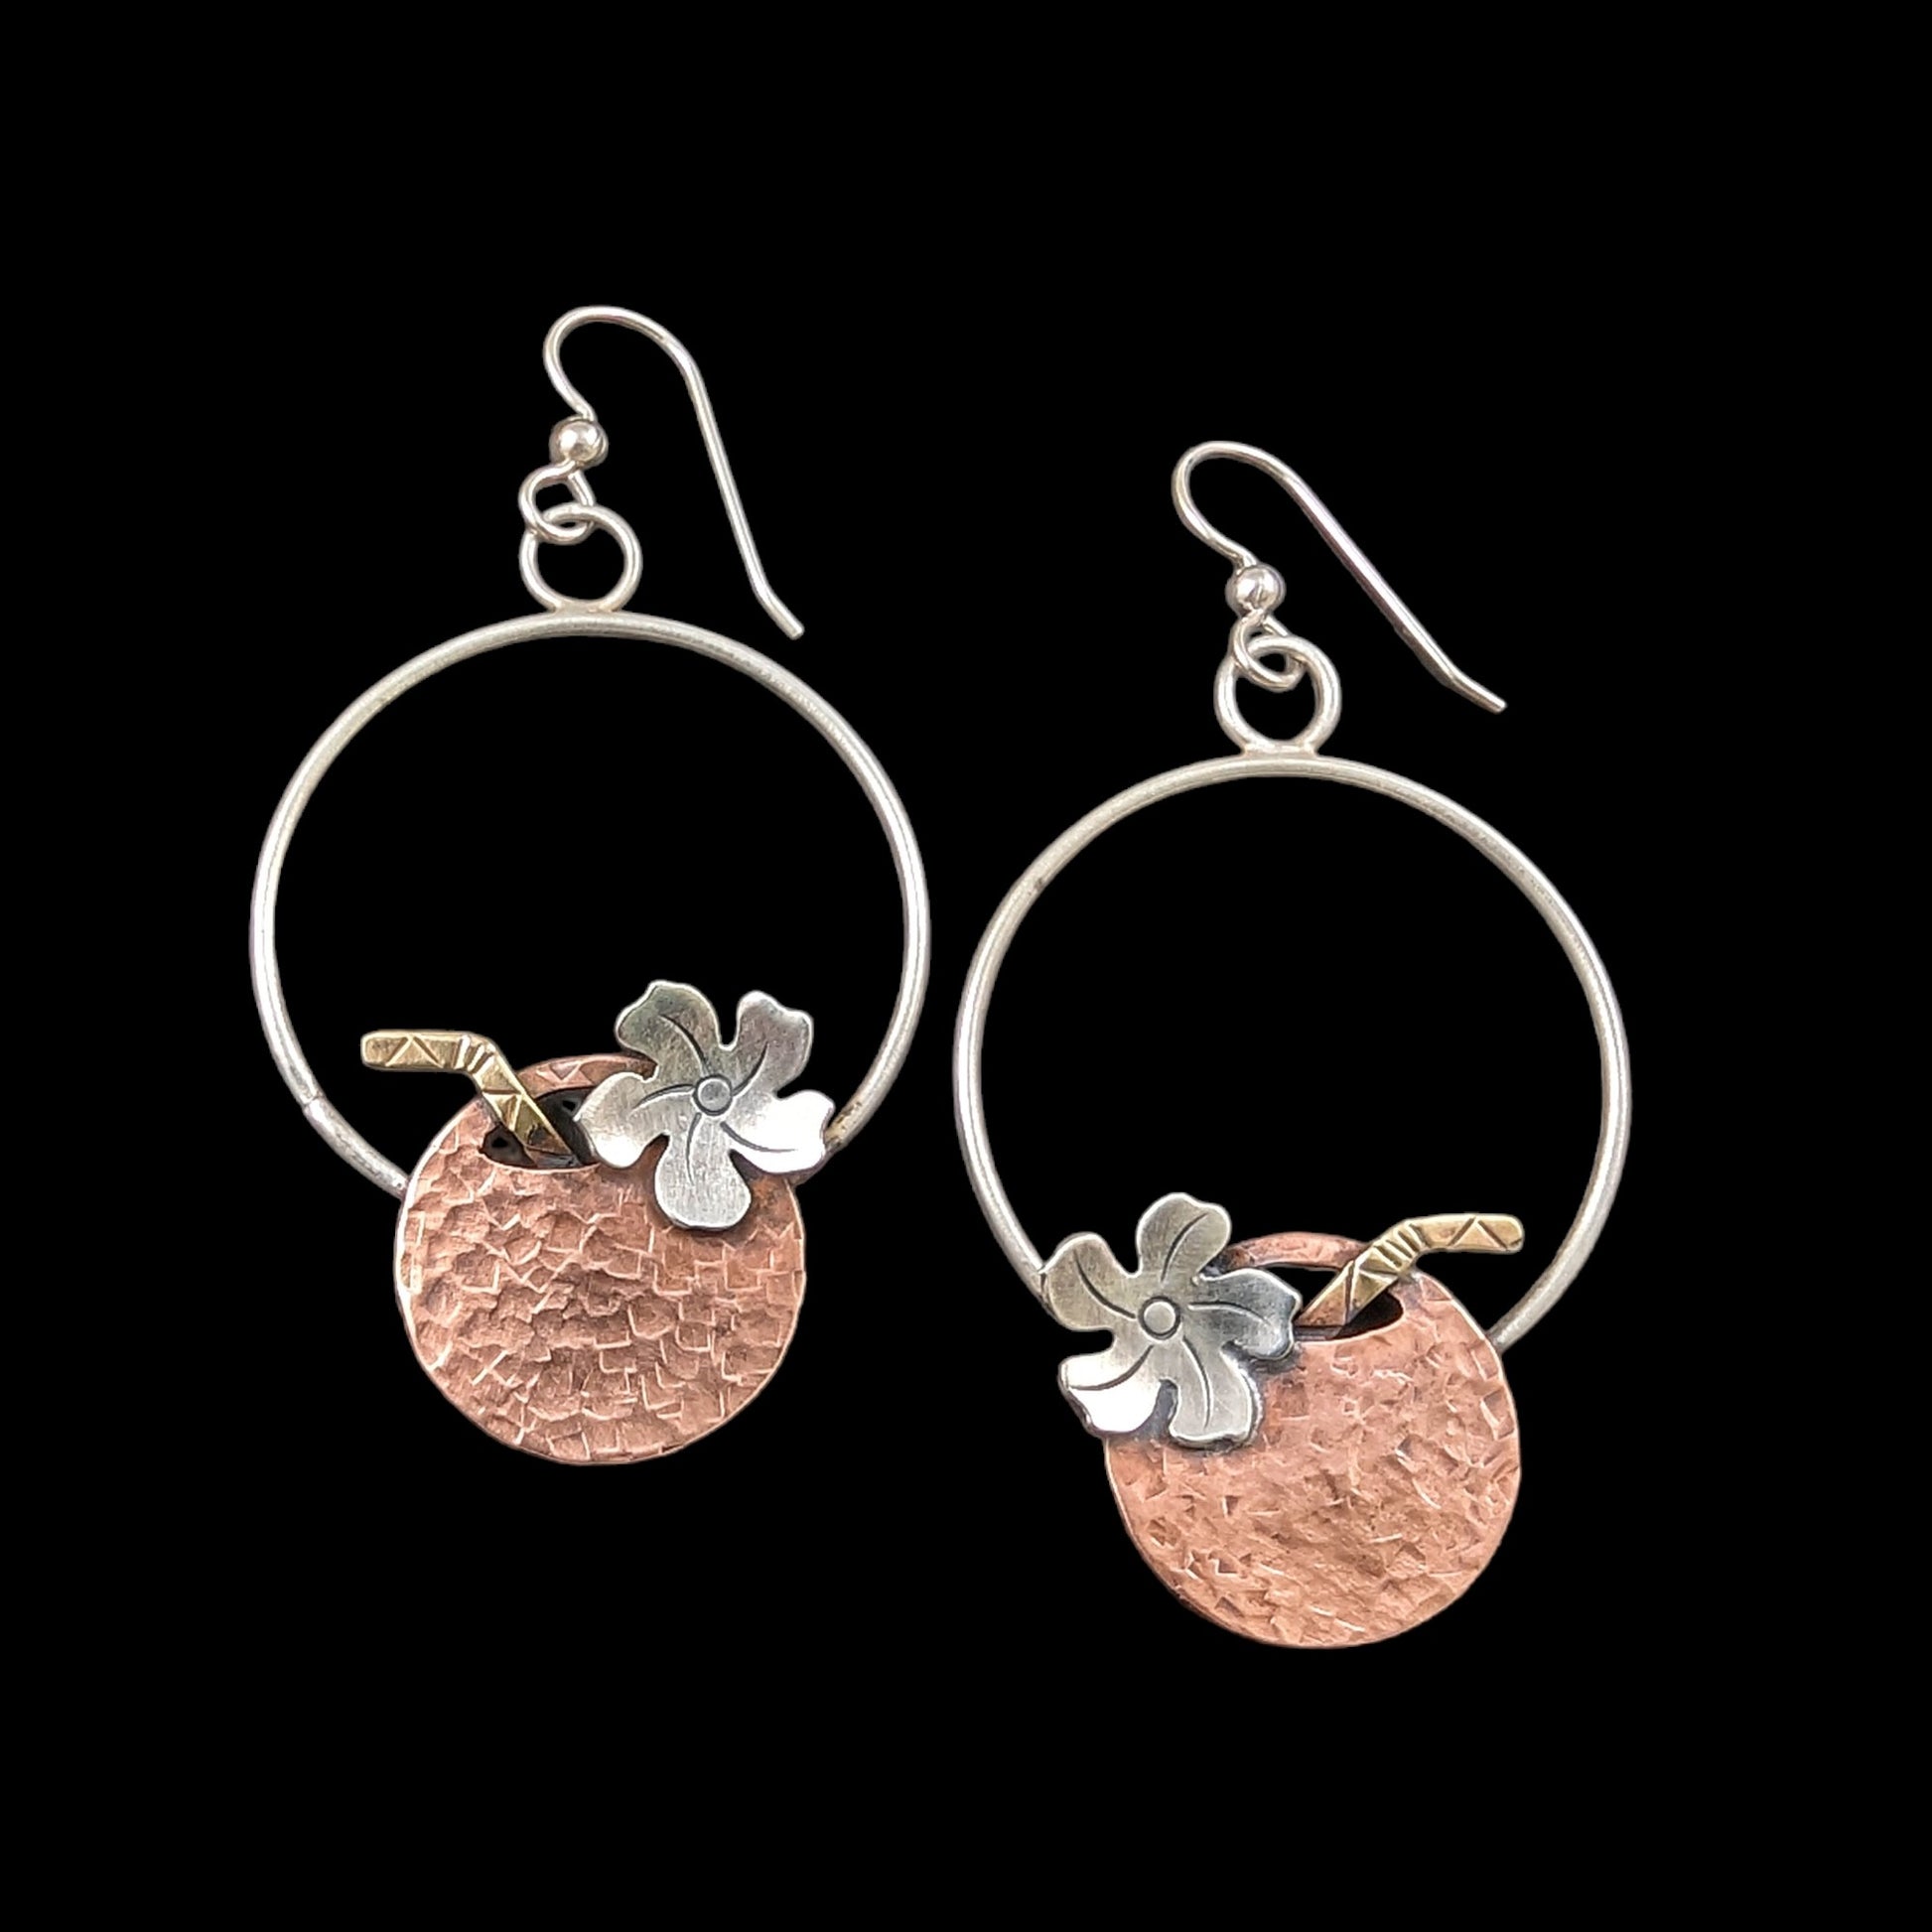 Copper coconut earrings on black background